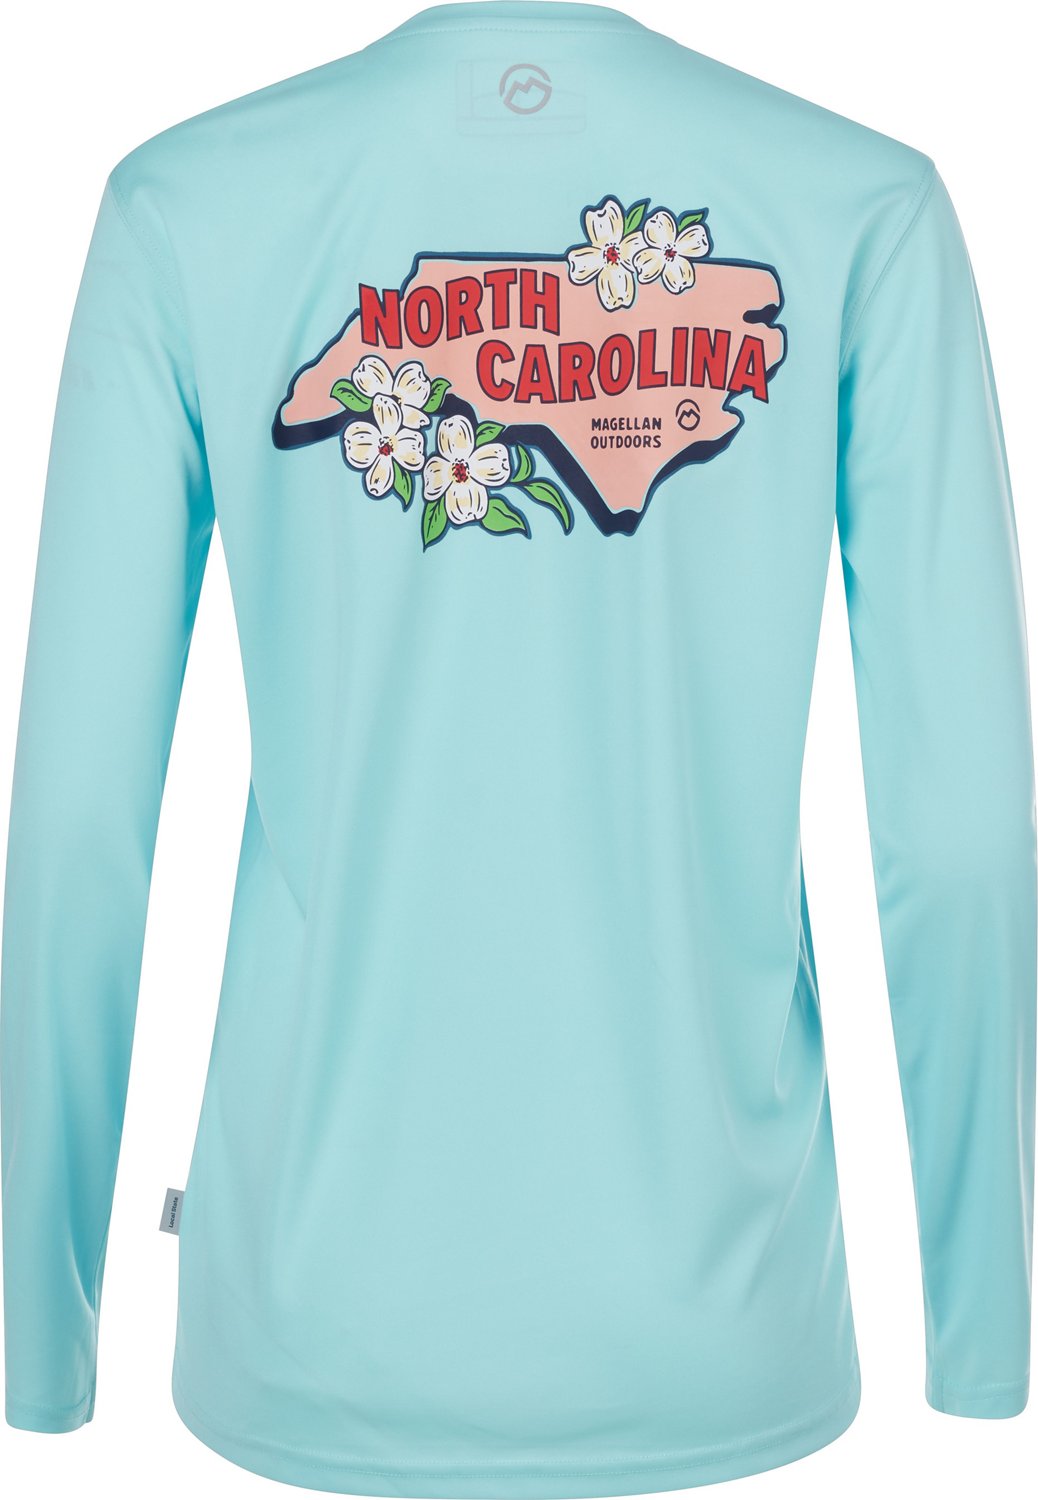 Magellan Women's Local State North Carolina Long Sleeve Fishing Shirt